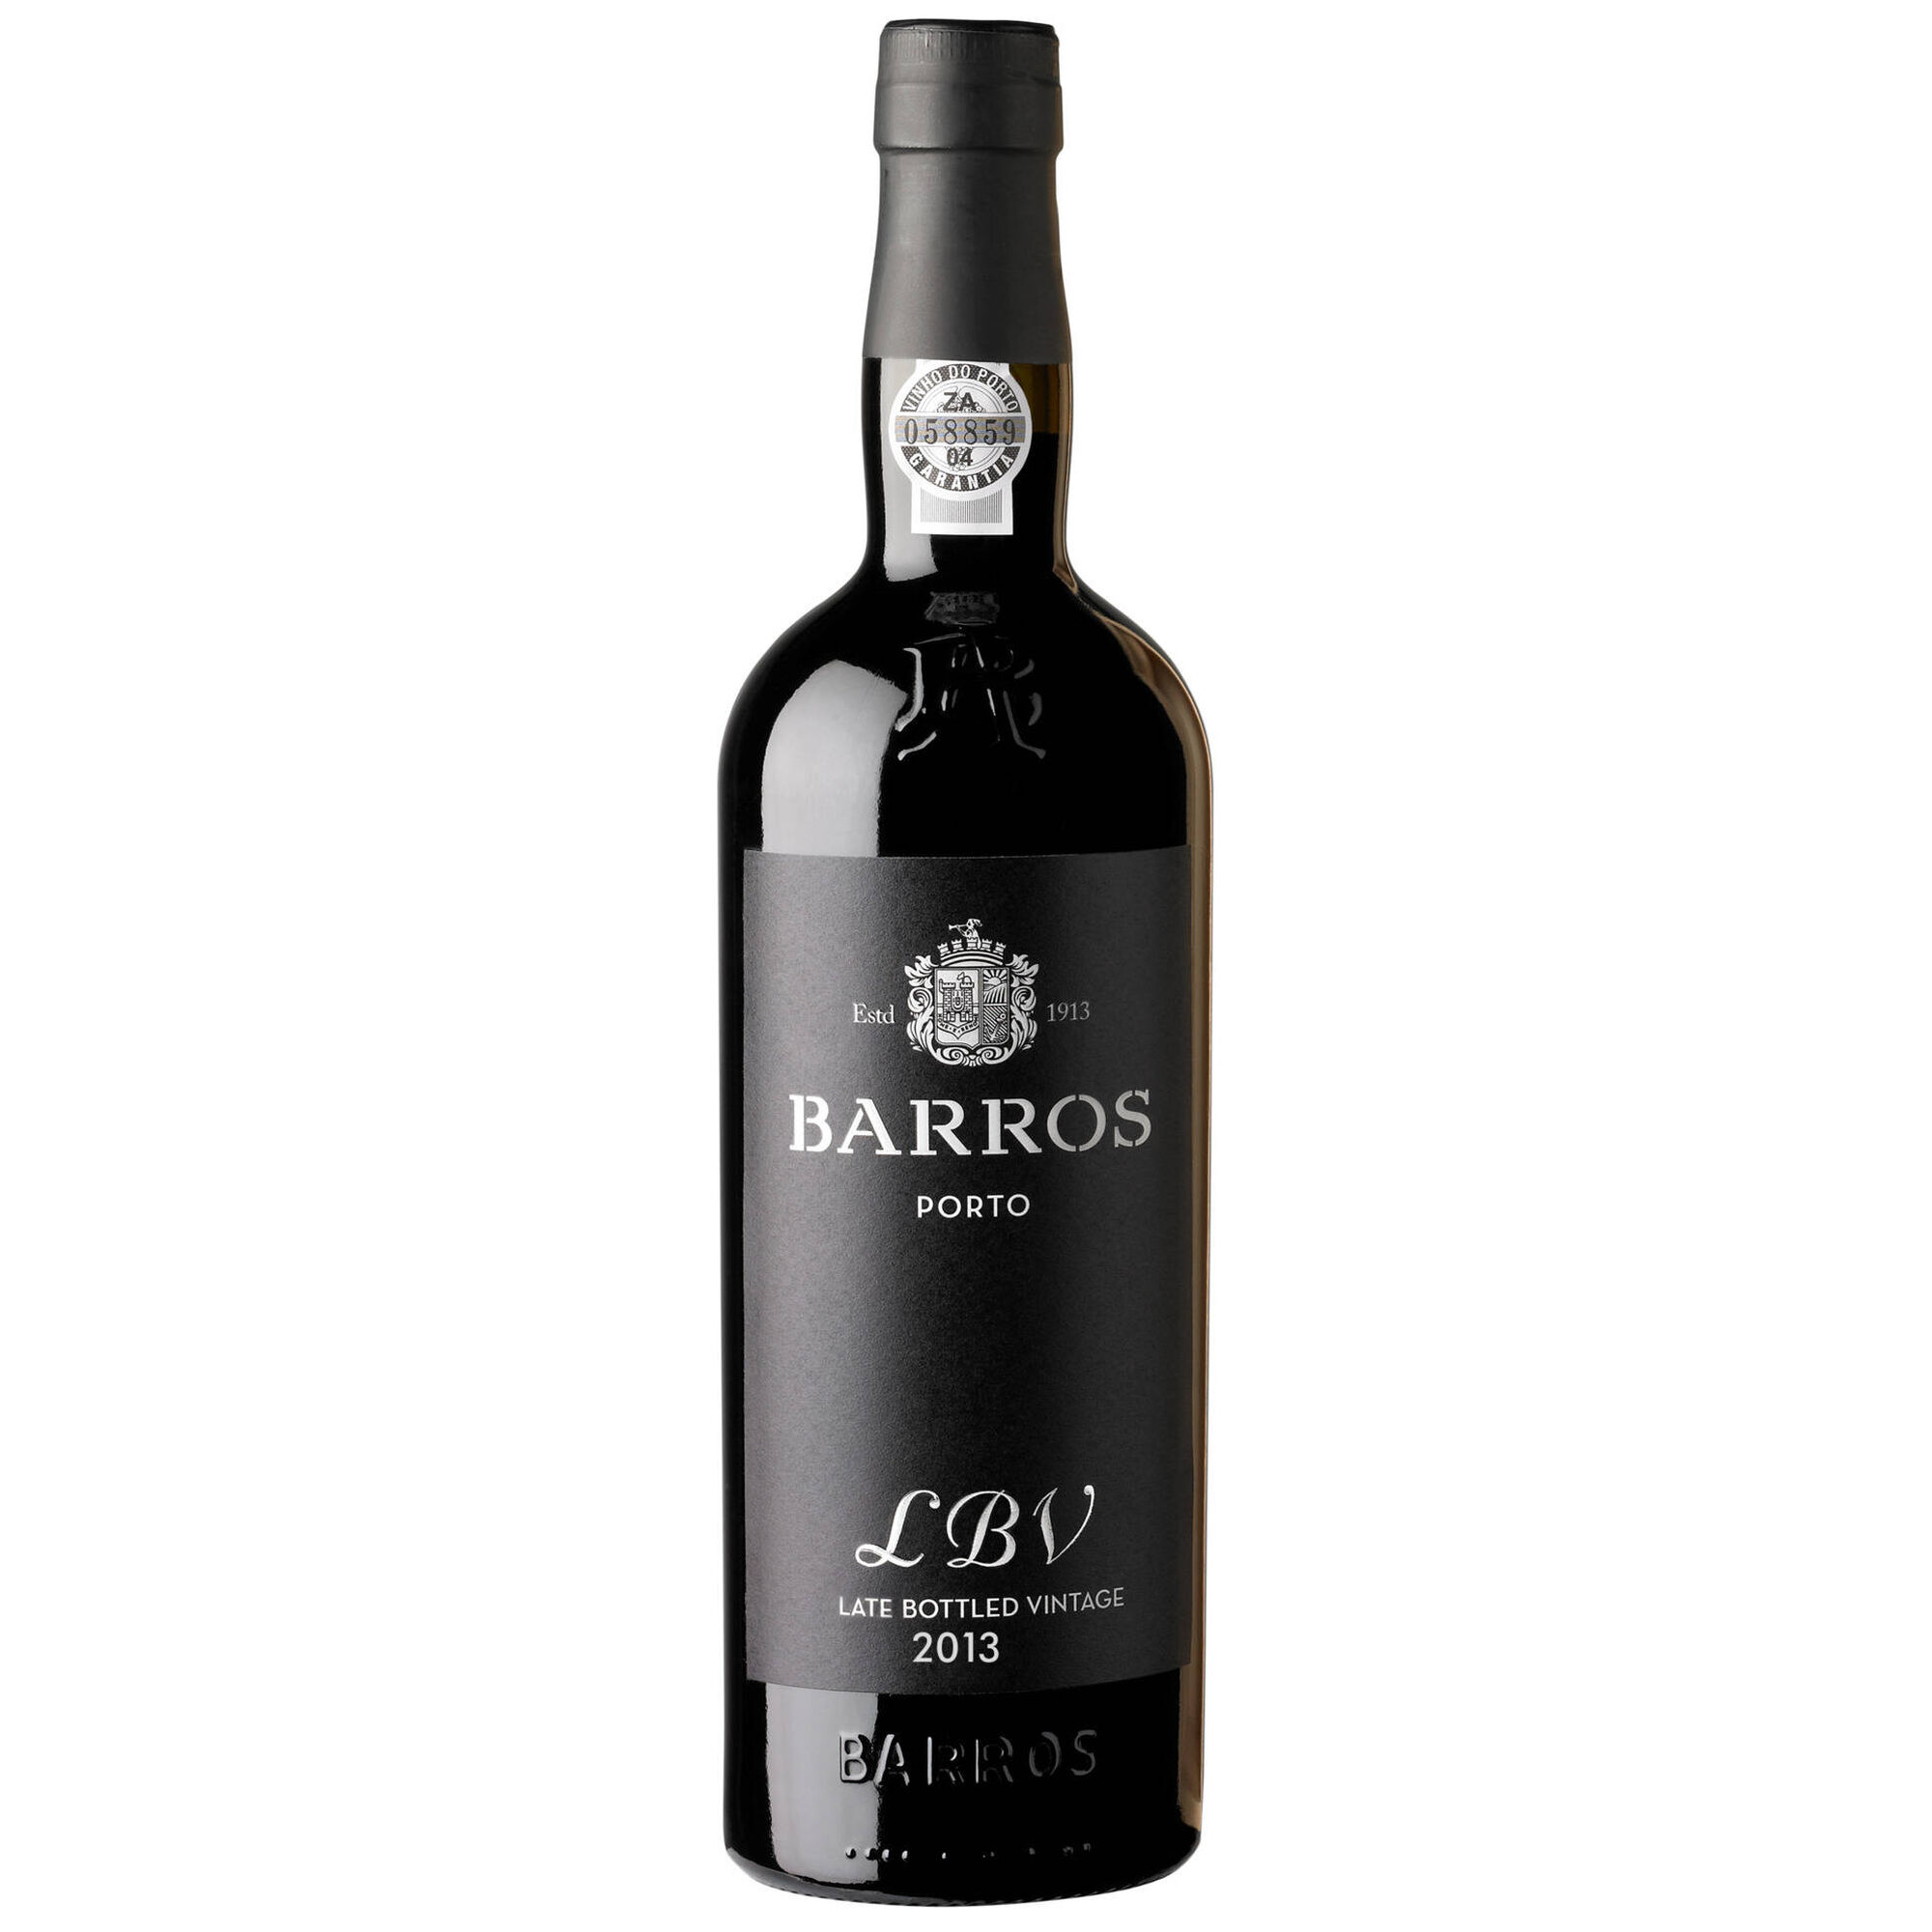 Barros Vinho do Porto Late Bottled Vintage